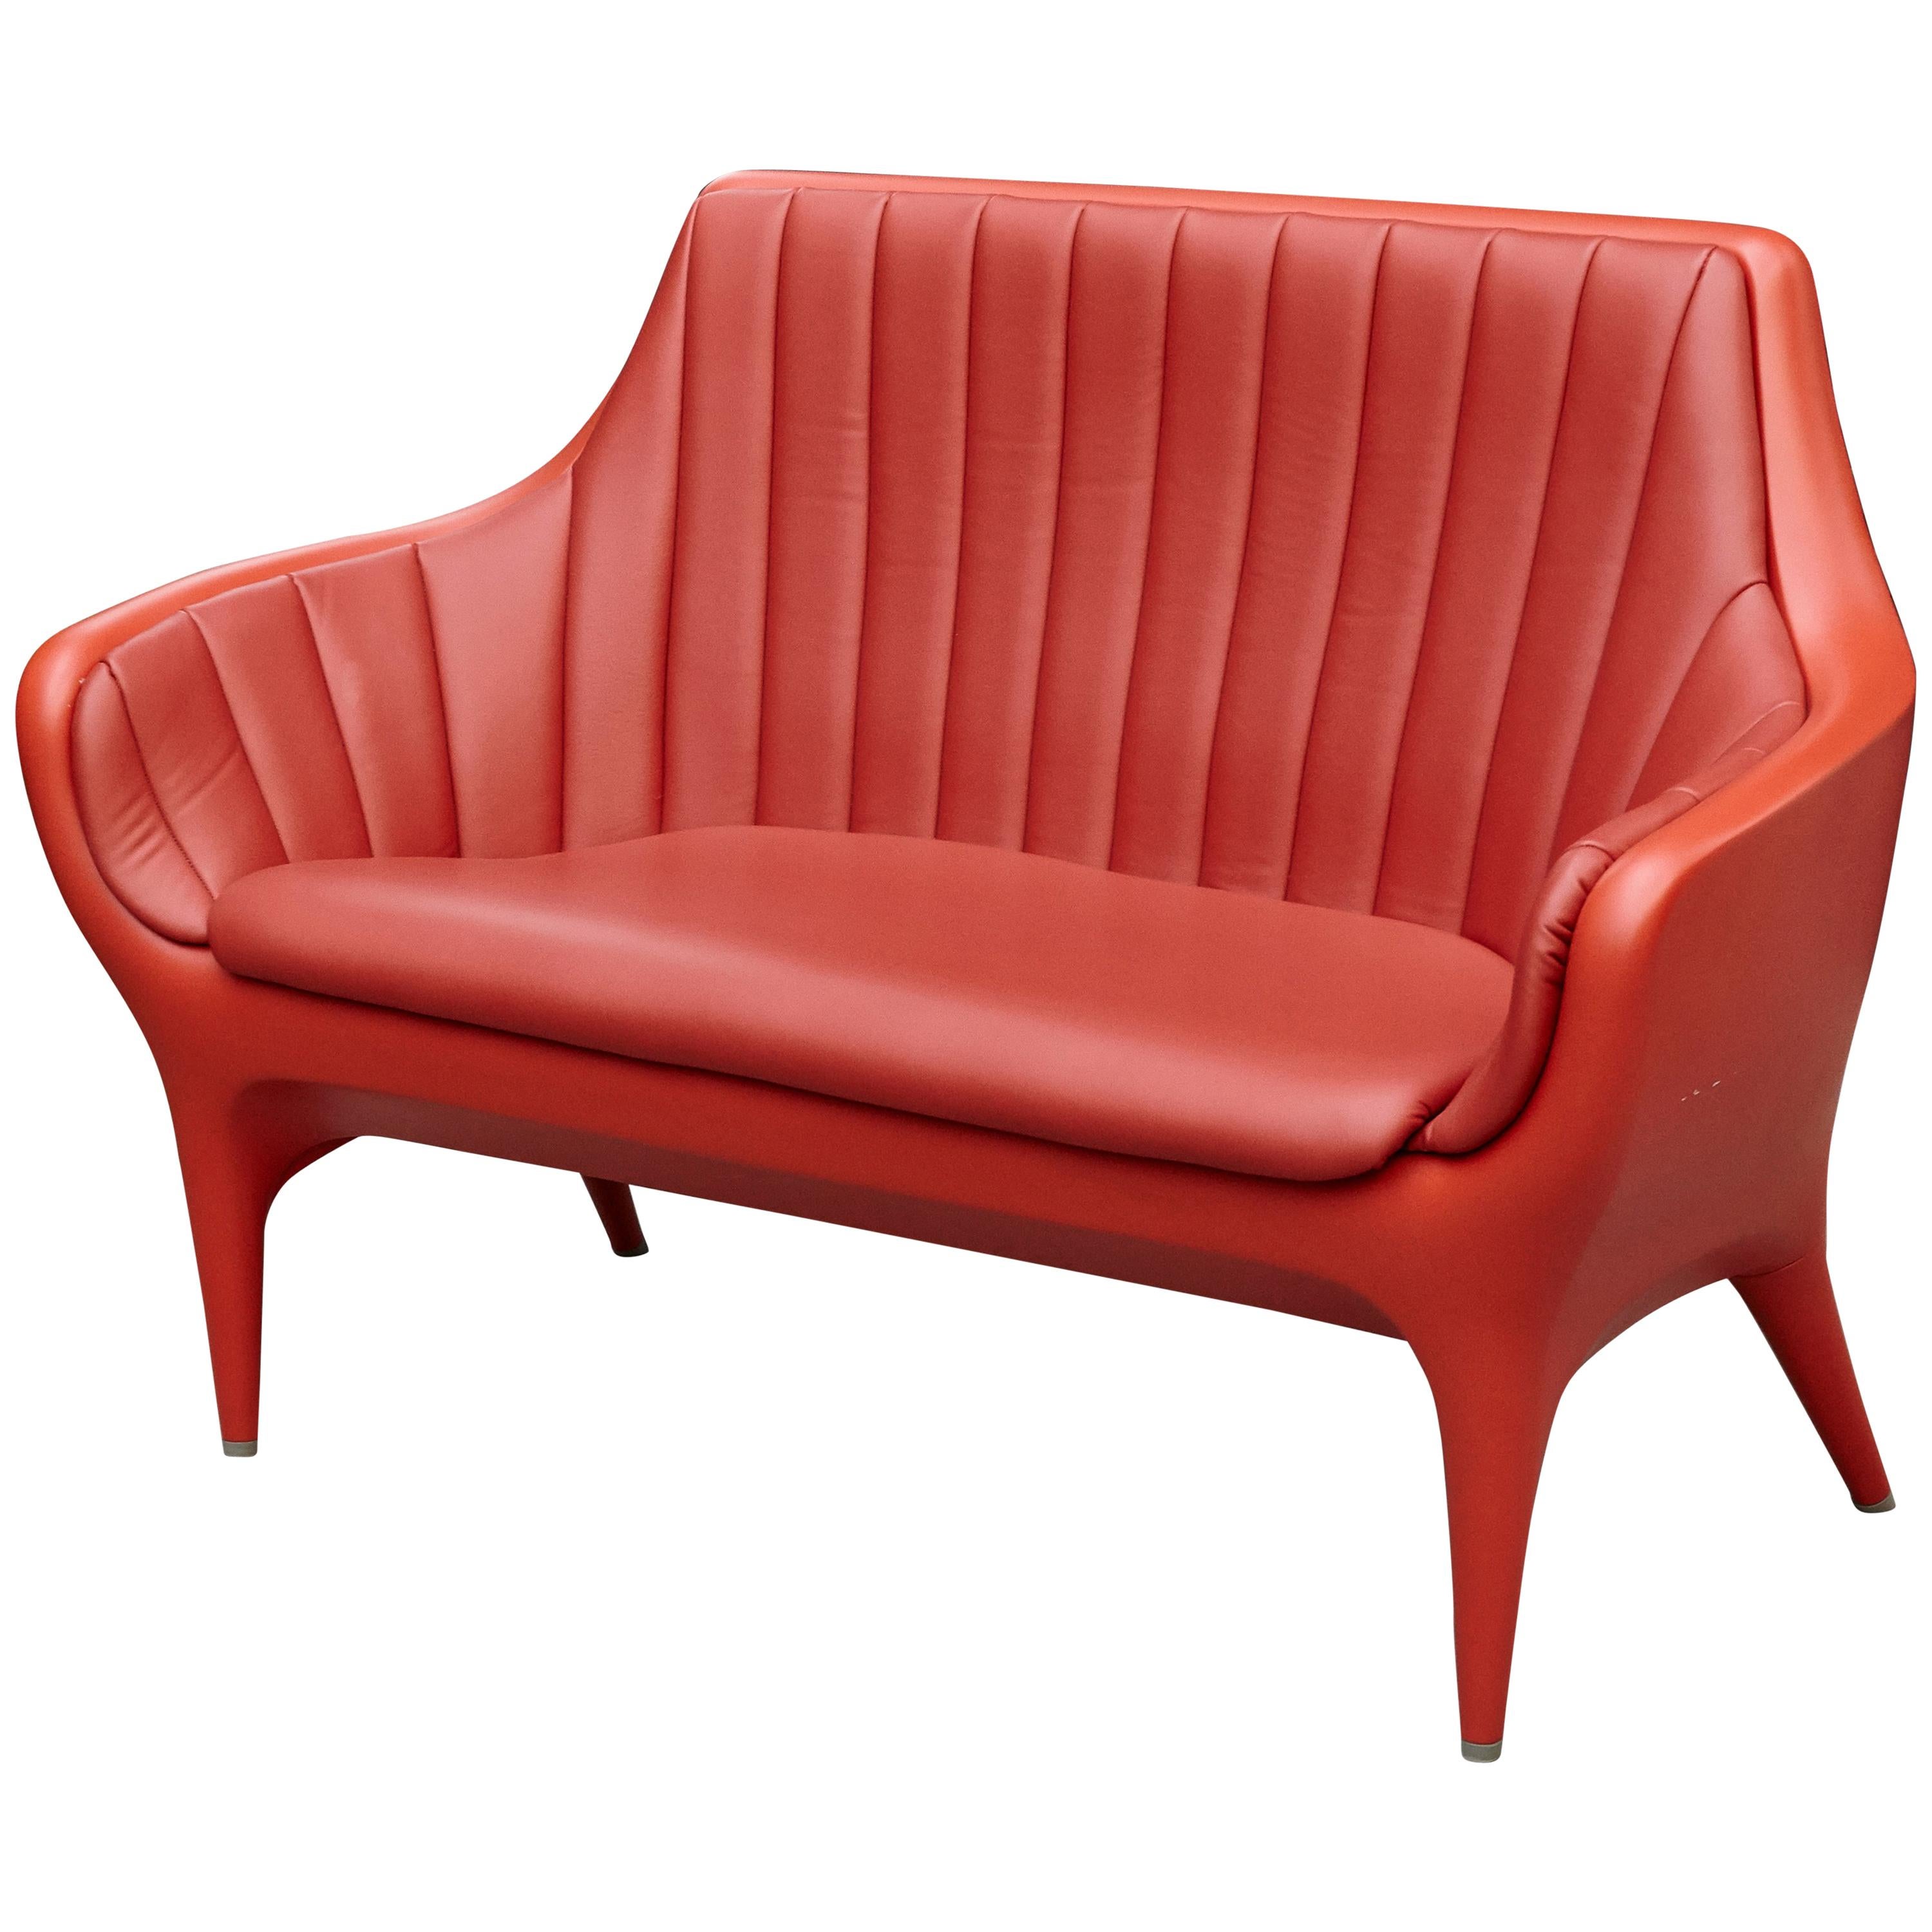 Jaime Hayon Contemporary Showtime Red Sofa